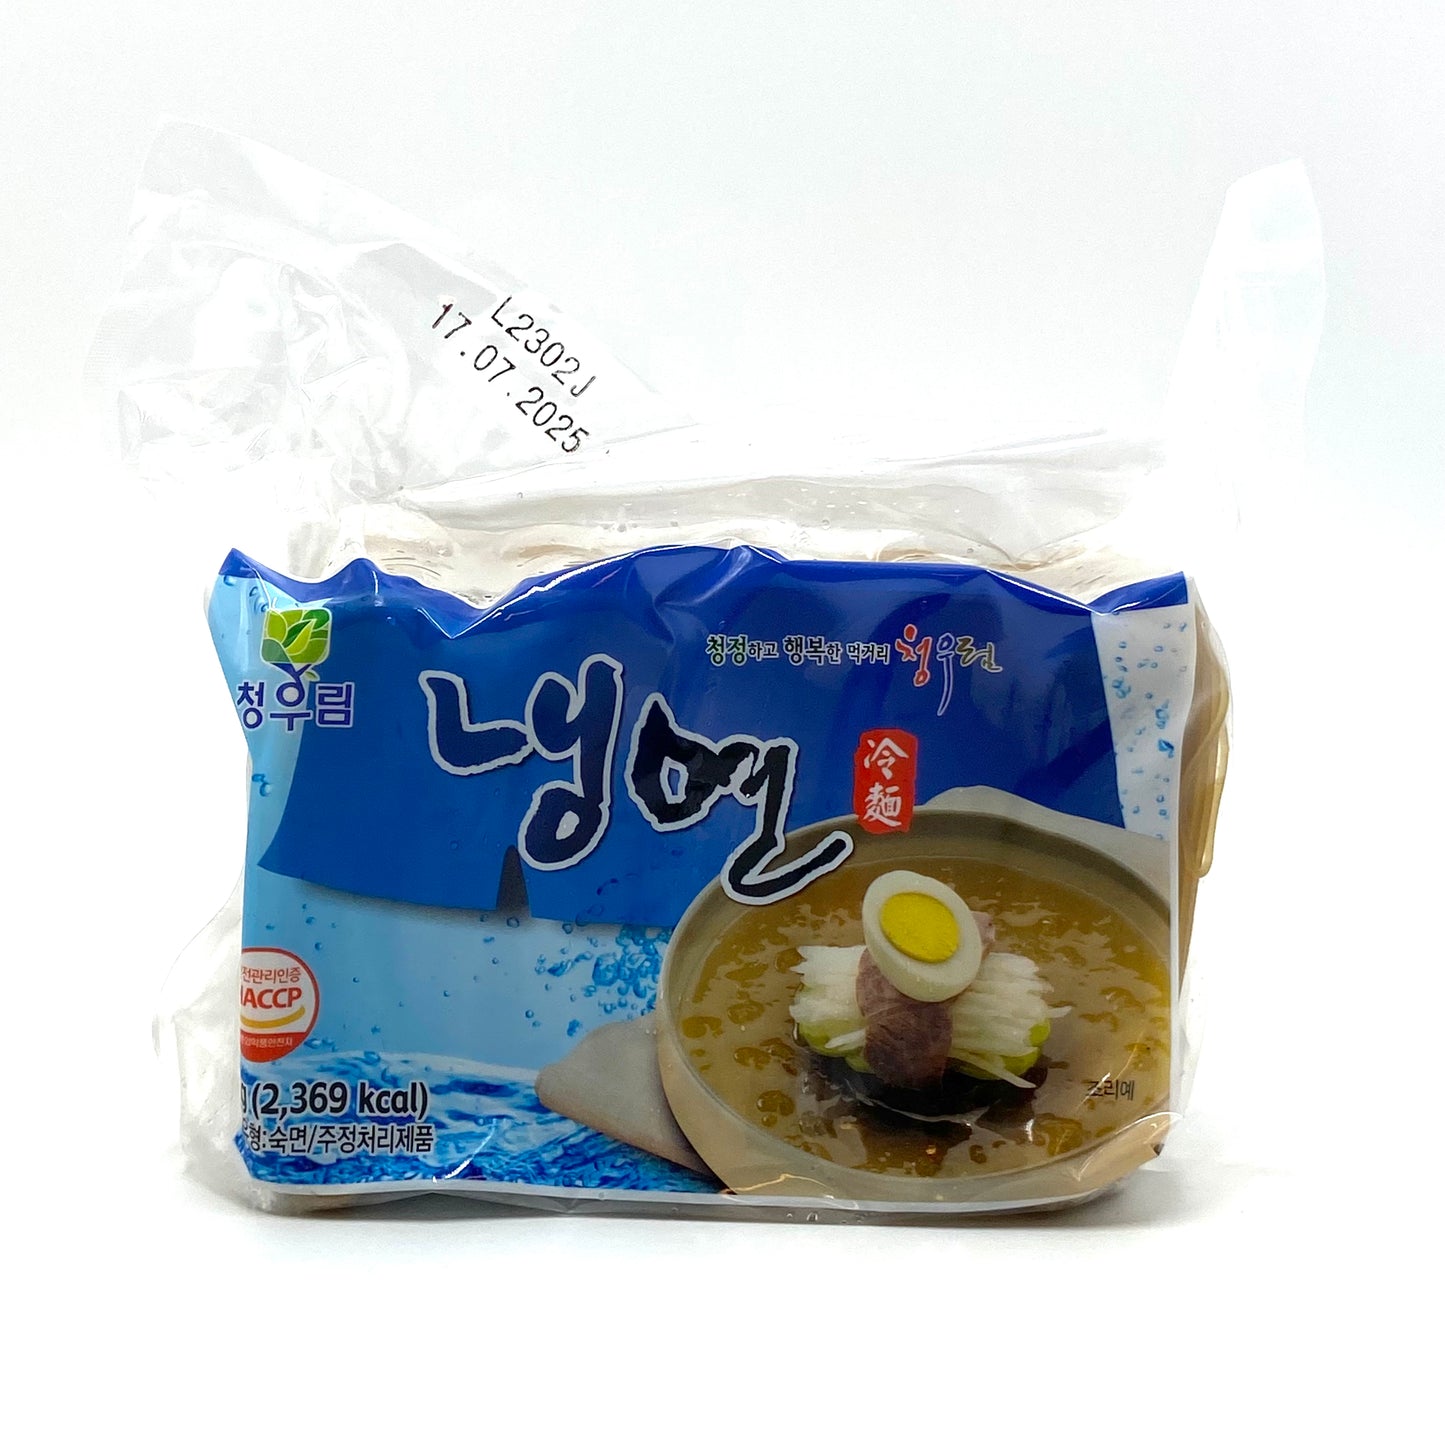 Chungwoorin Spapghetti di Saraceno 1kg ❄️